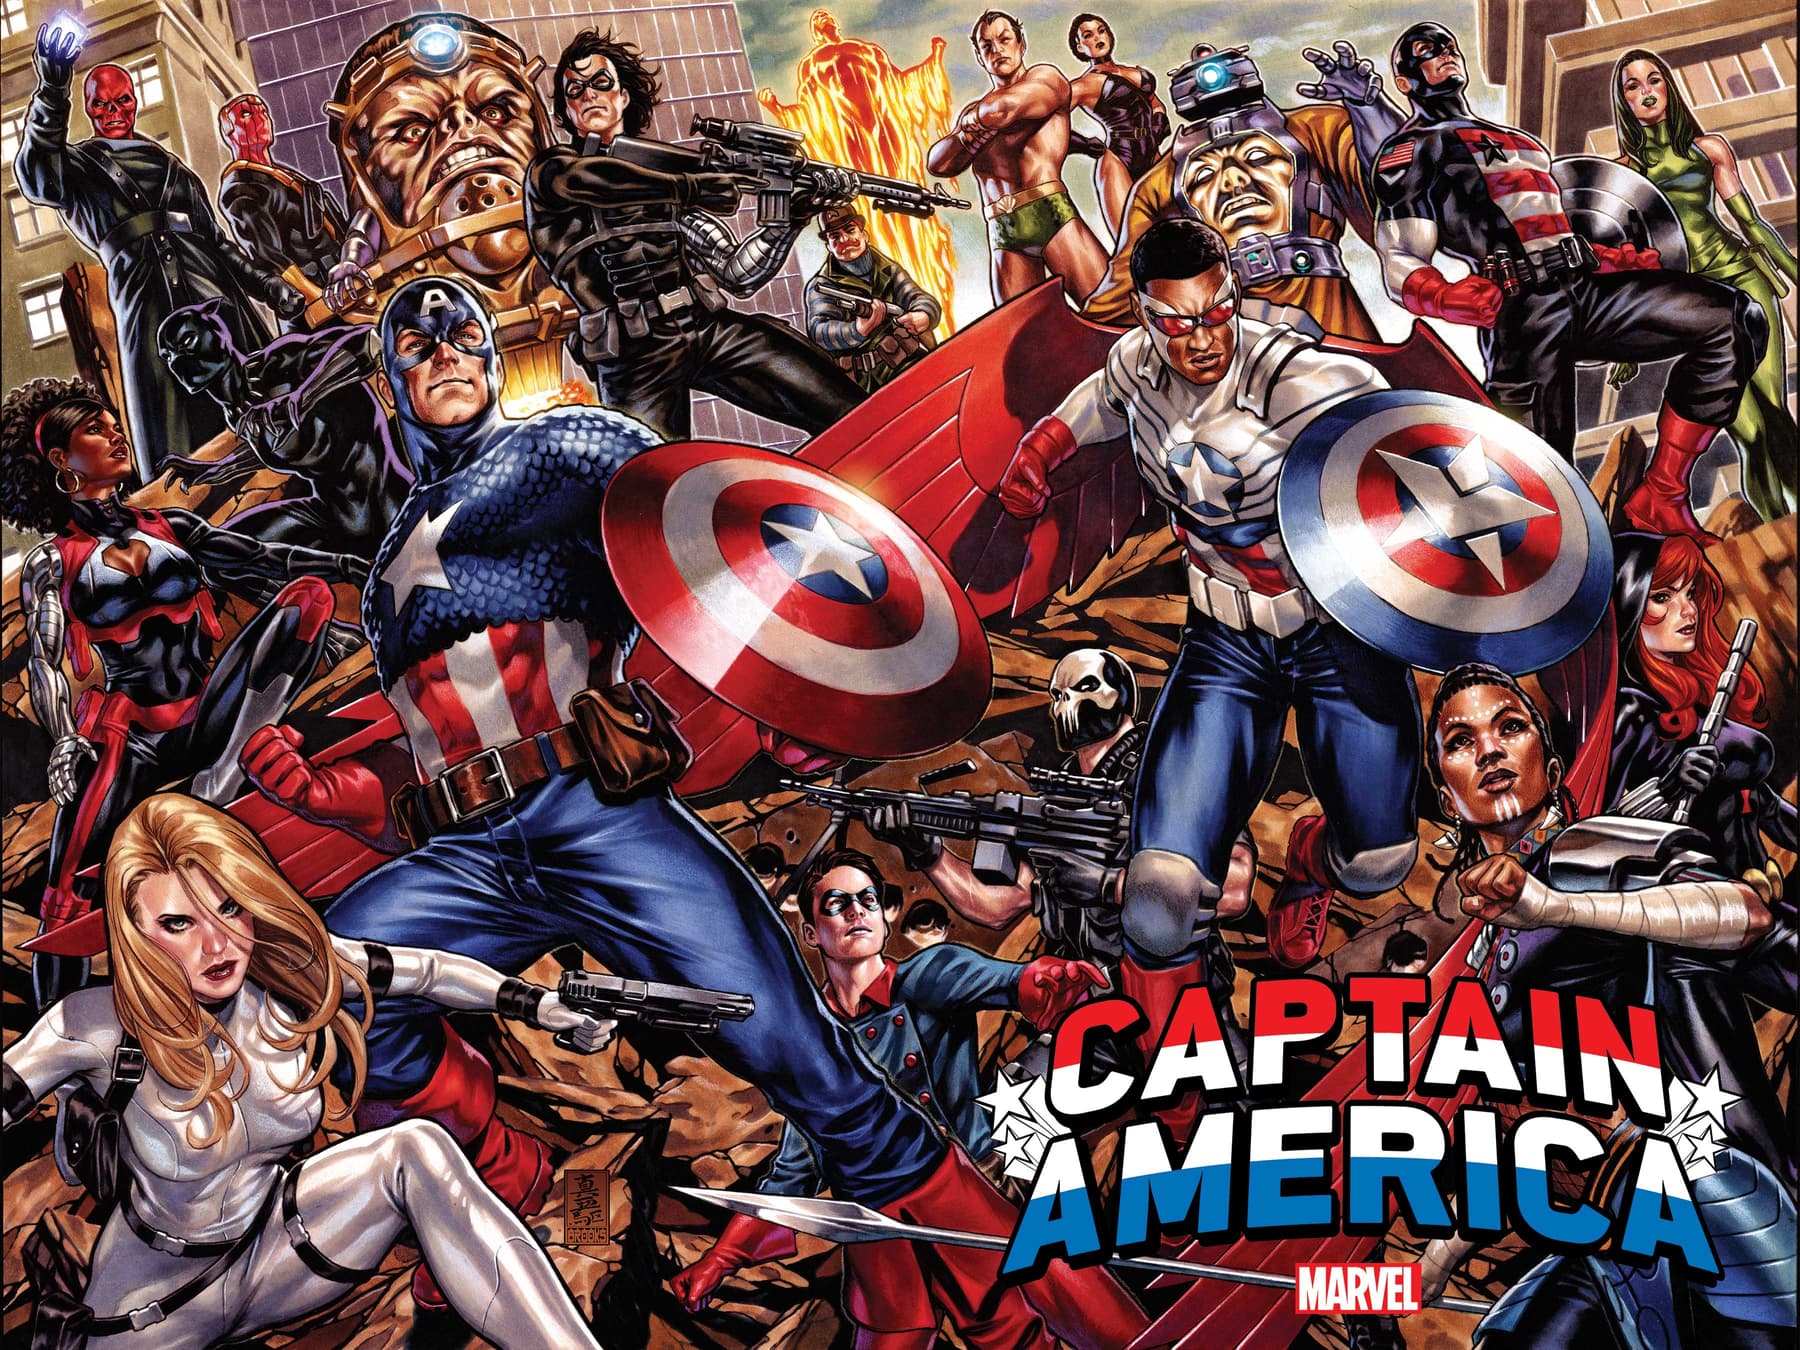 Captain America #0 Wraparound Cover by Mark Brooks